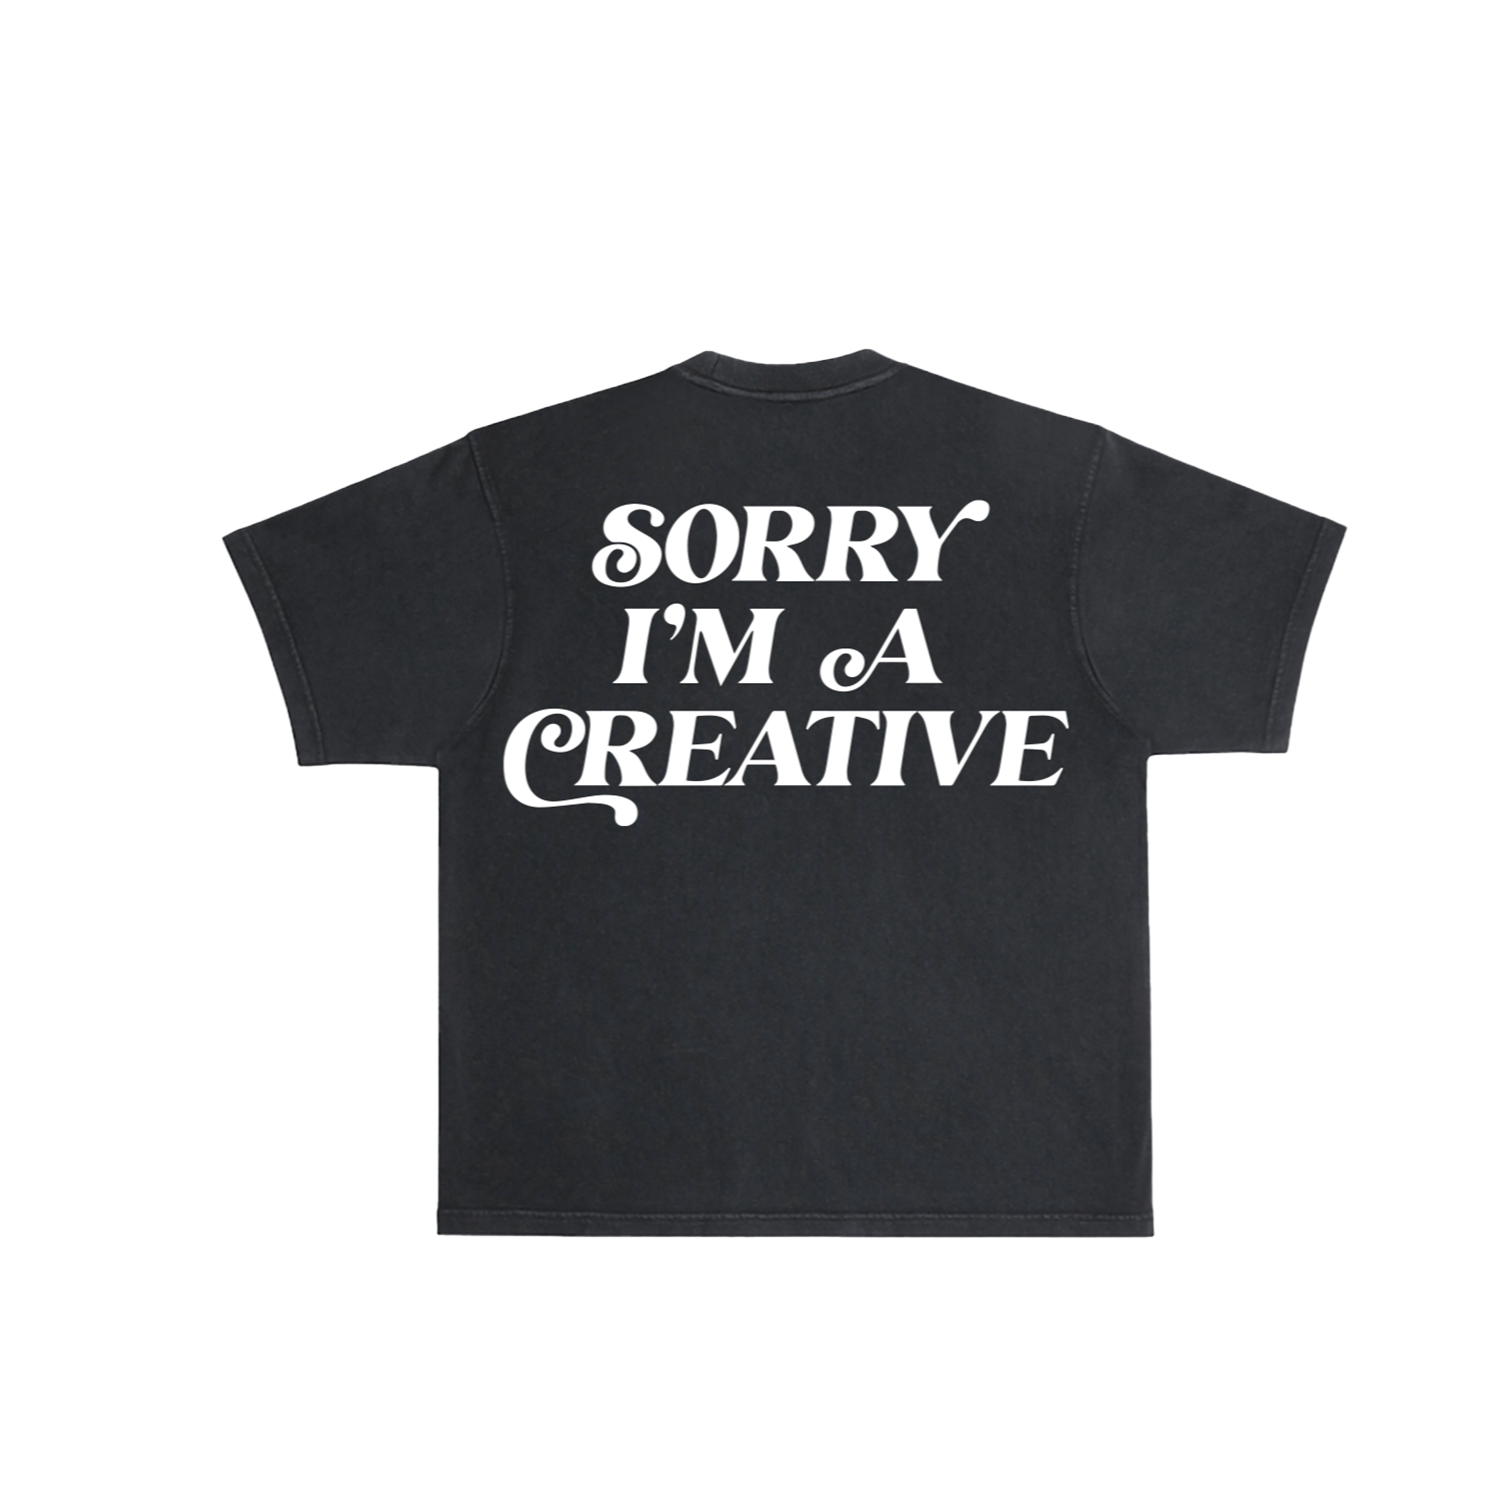 Sorry I'm A Creative - T-Shirt (Black +White)